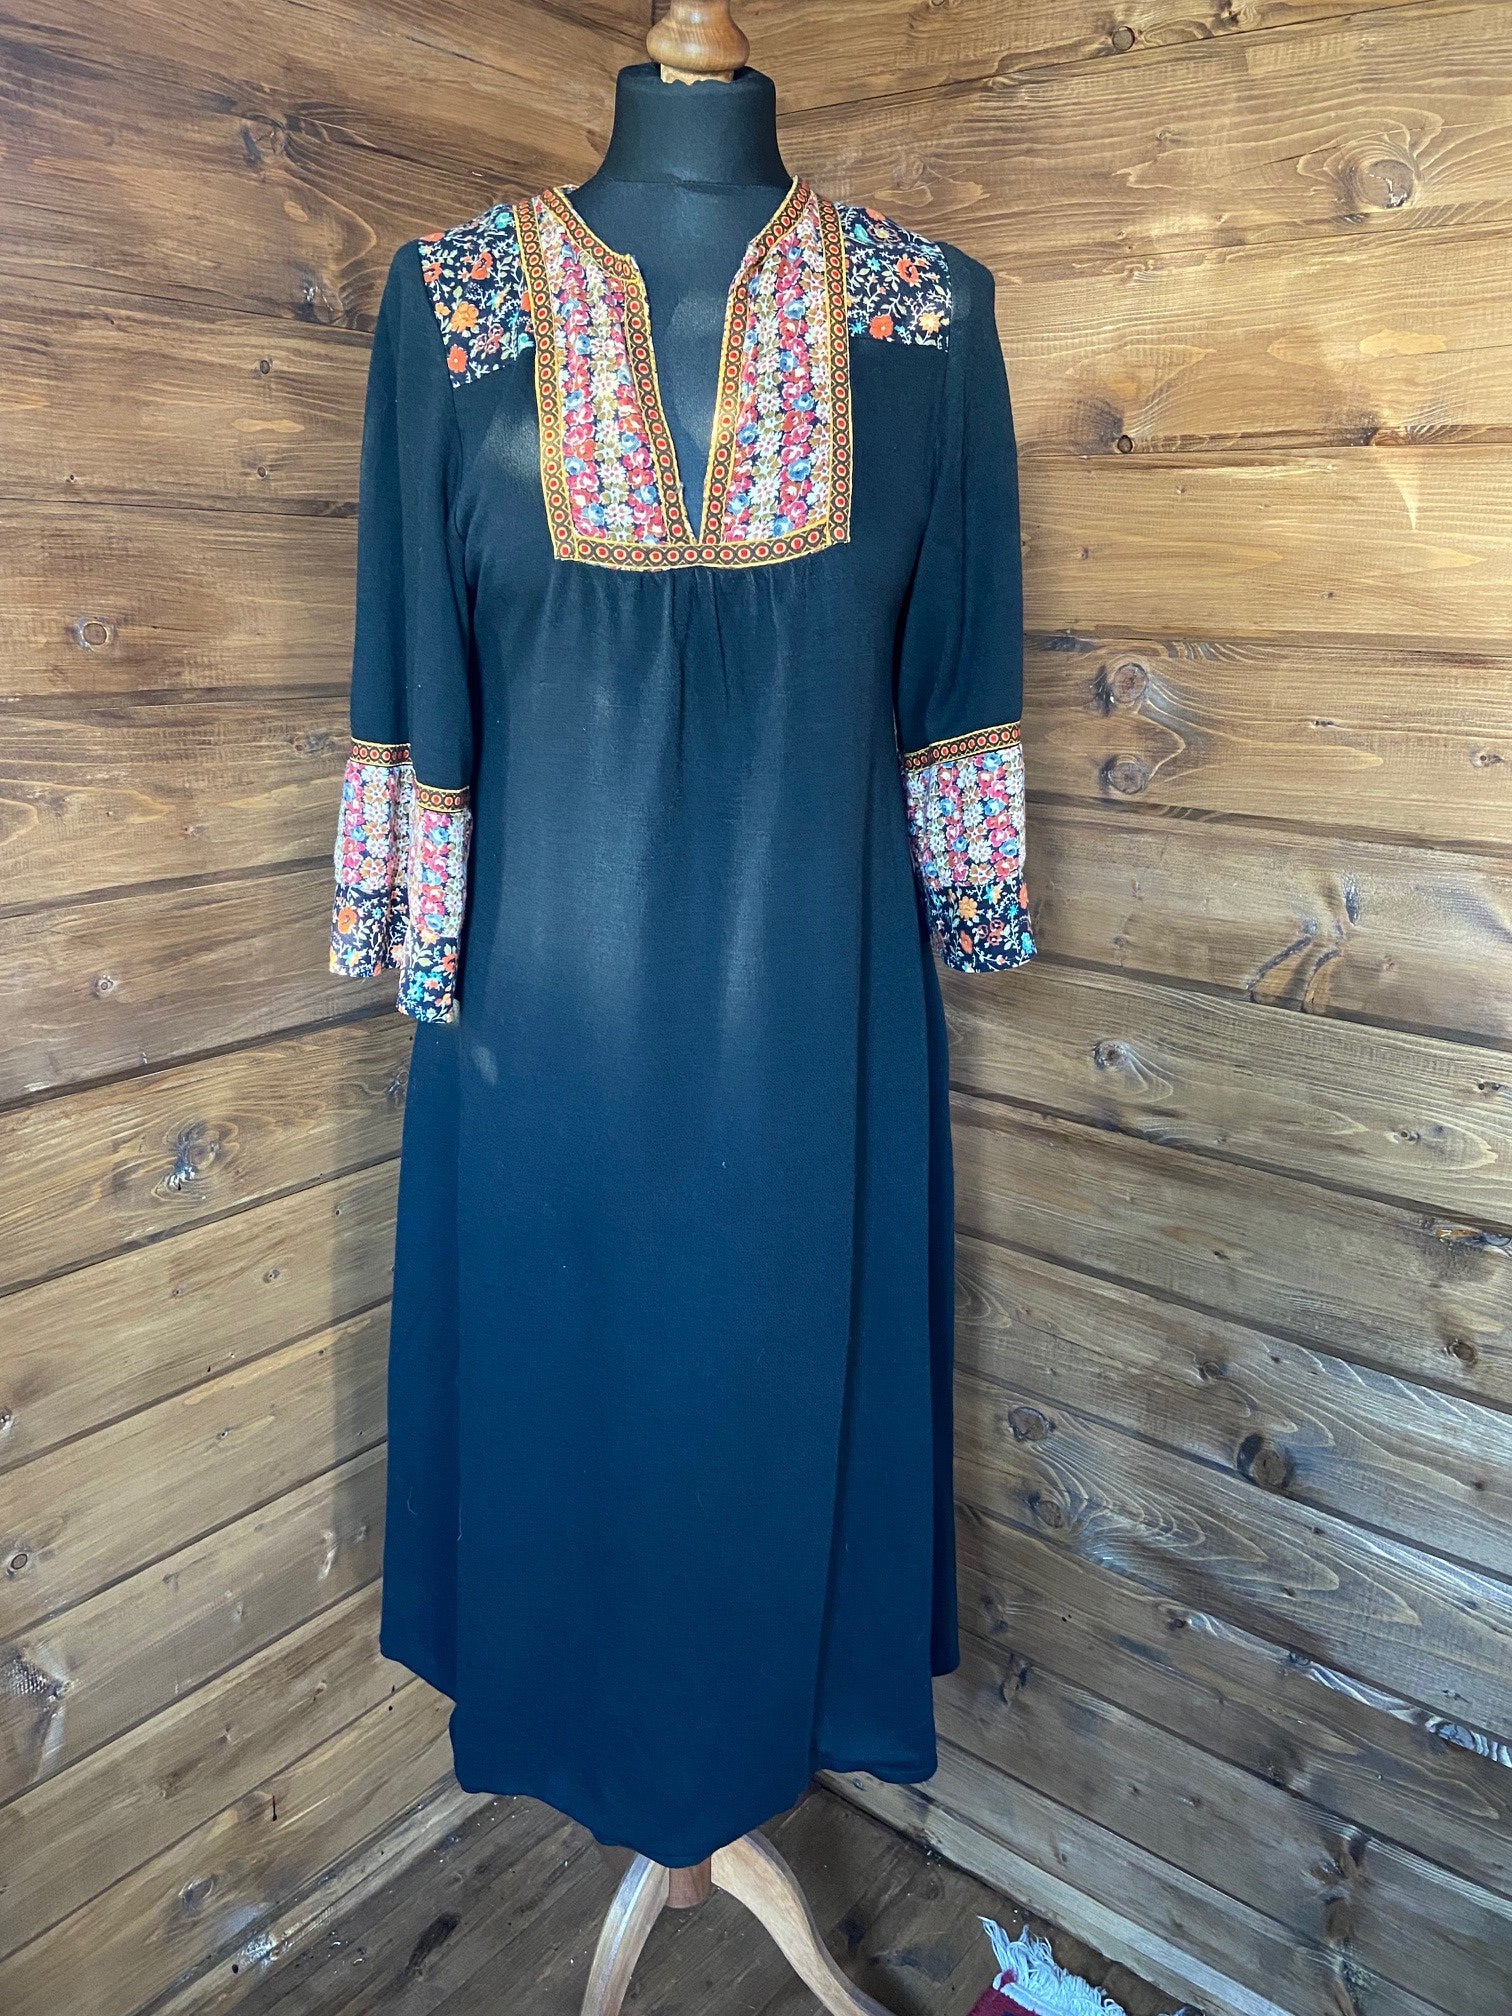 70s maxi caftan dress